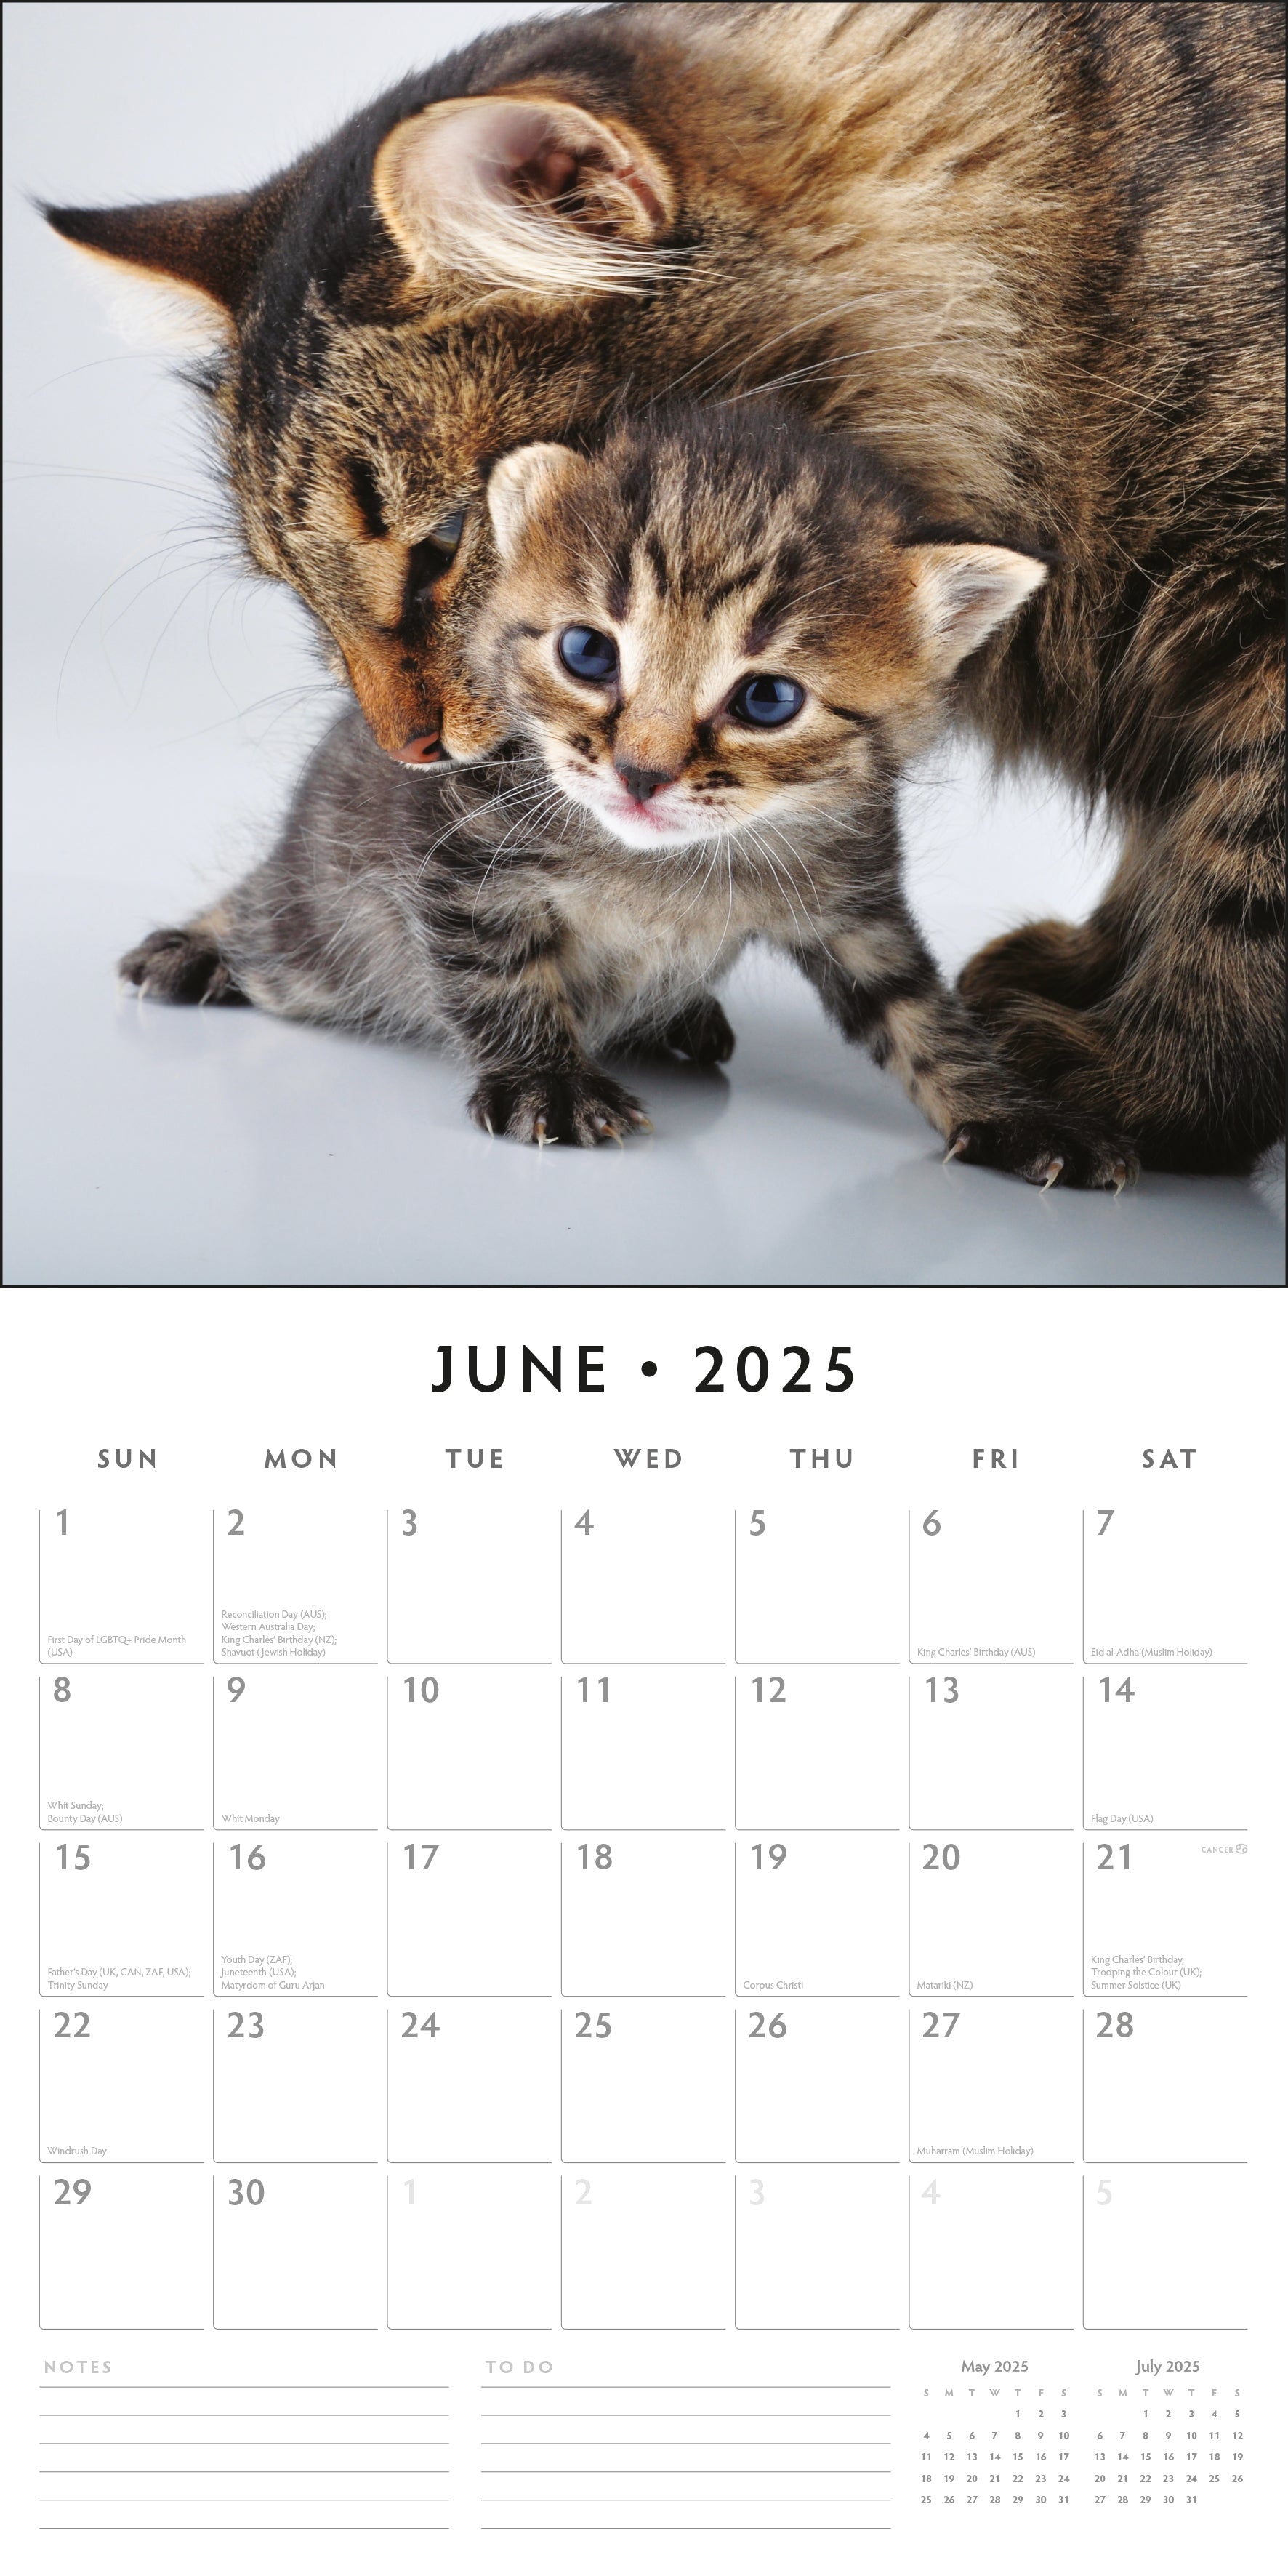 2025 Adorable Cats - Square Wall Calendar